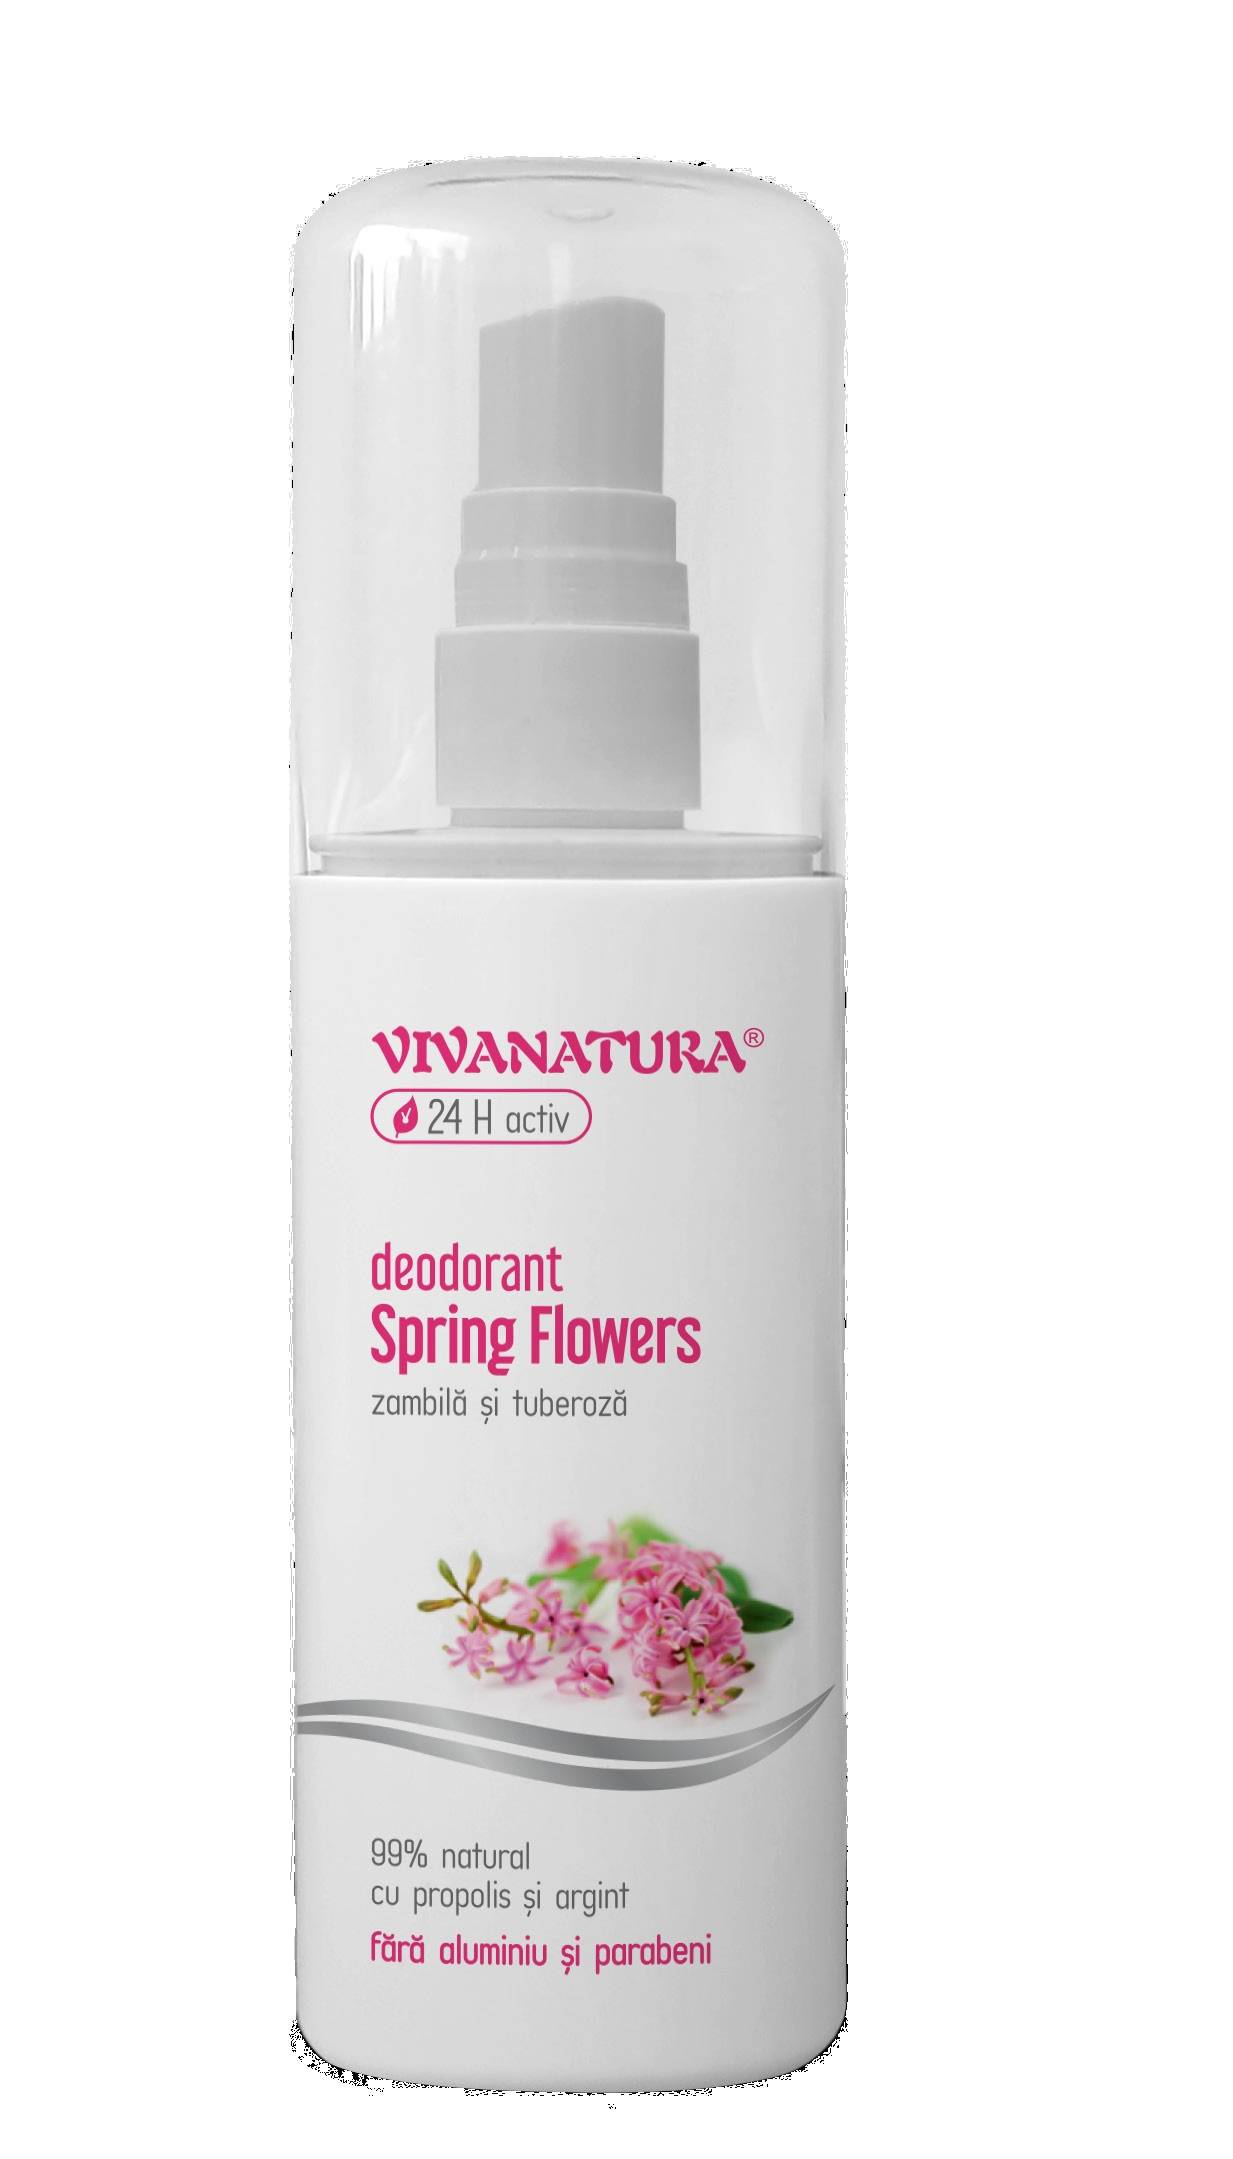 Deodorant natural spray spring flowers - zambila si tuberoza 100ml - vivanatura